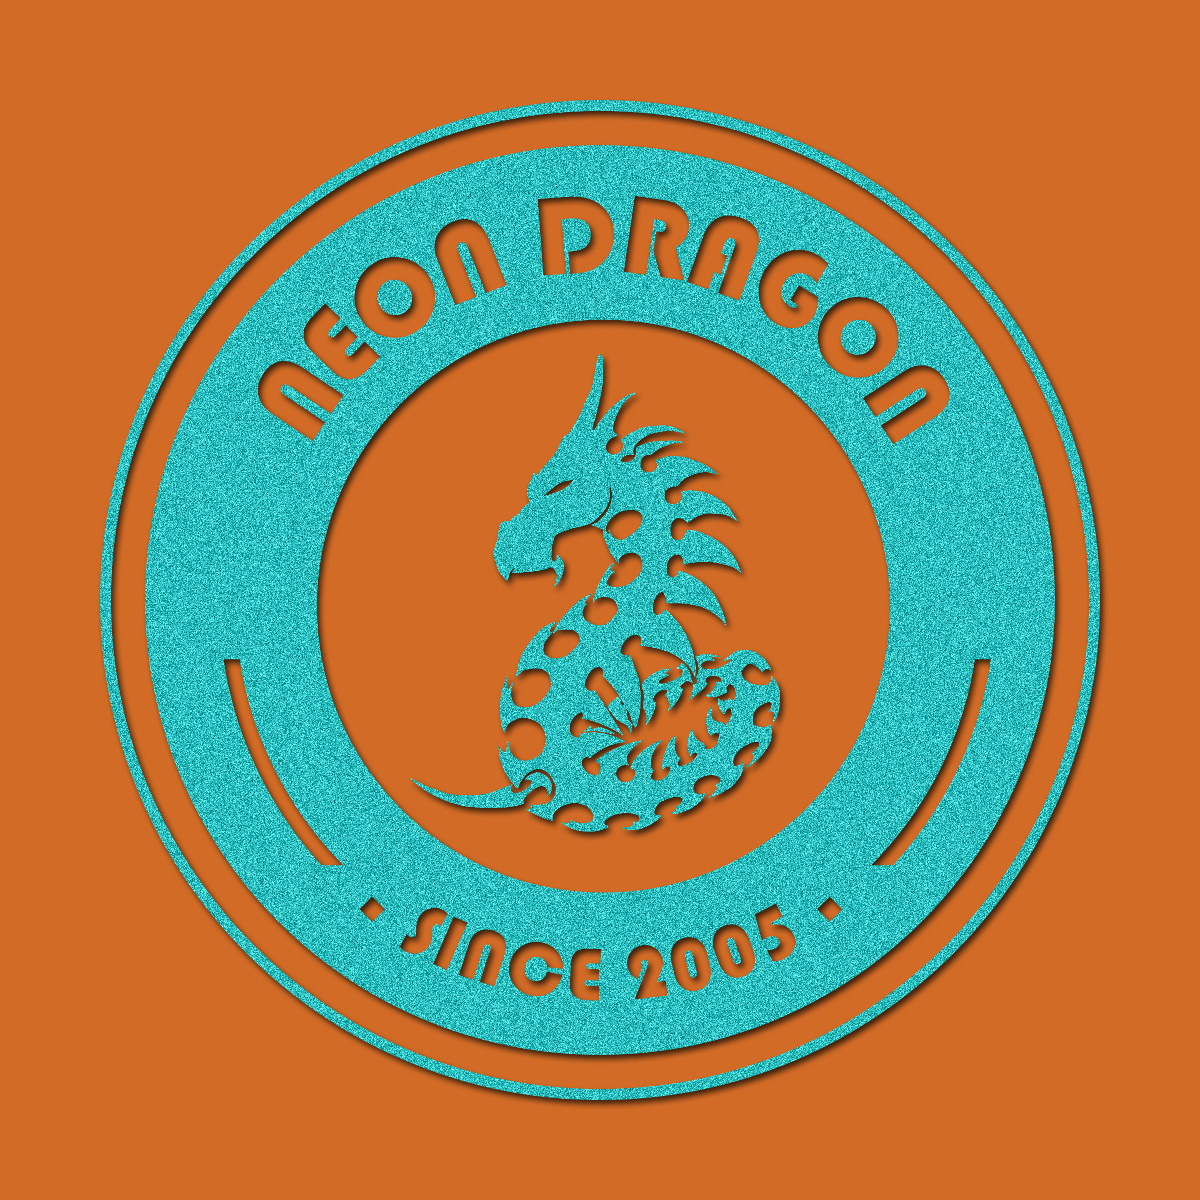 neon dragon tattoo logo Retro good times